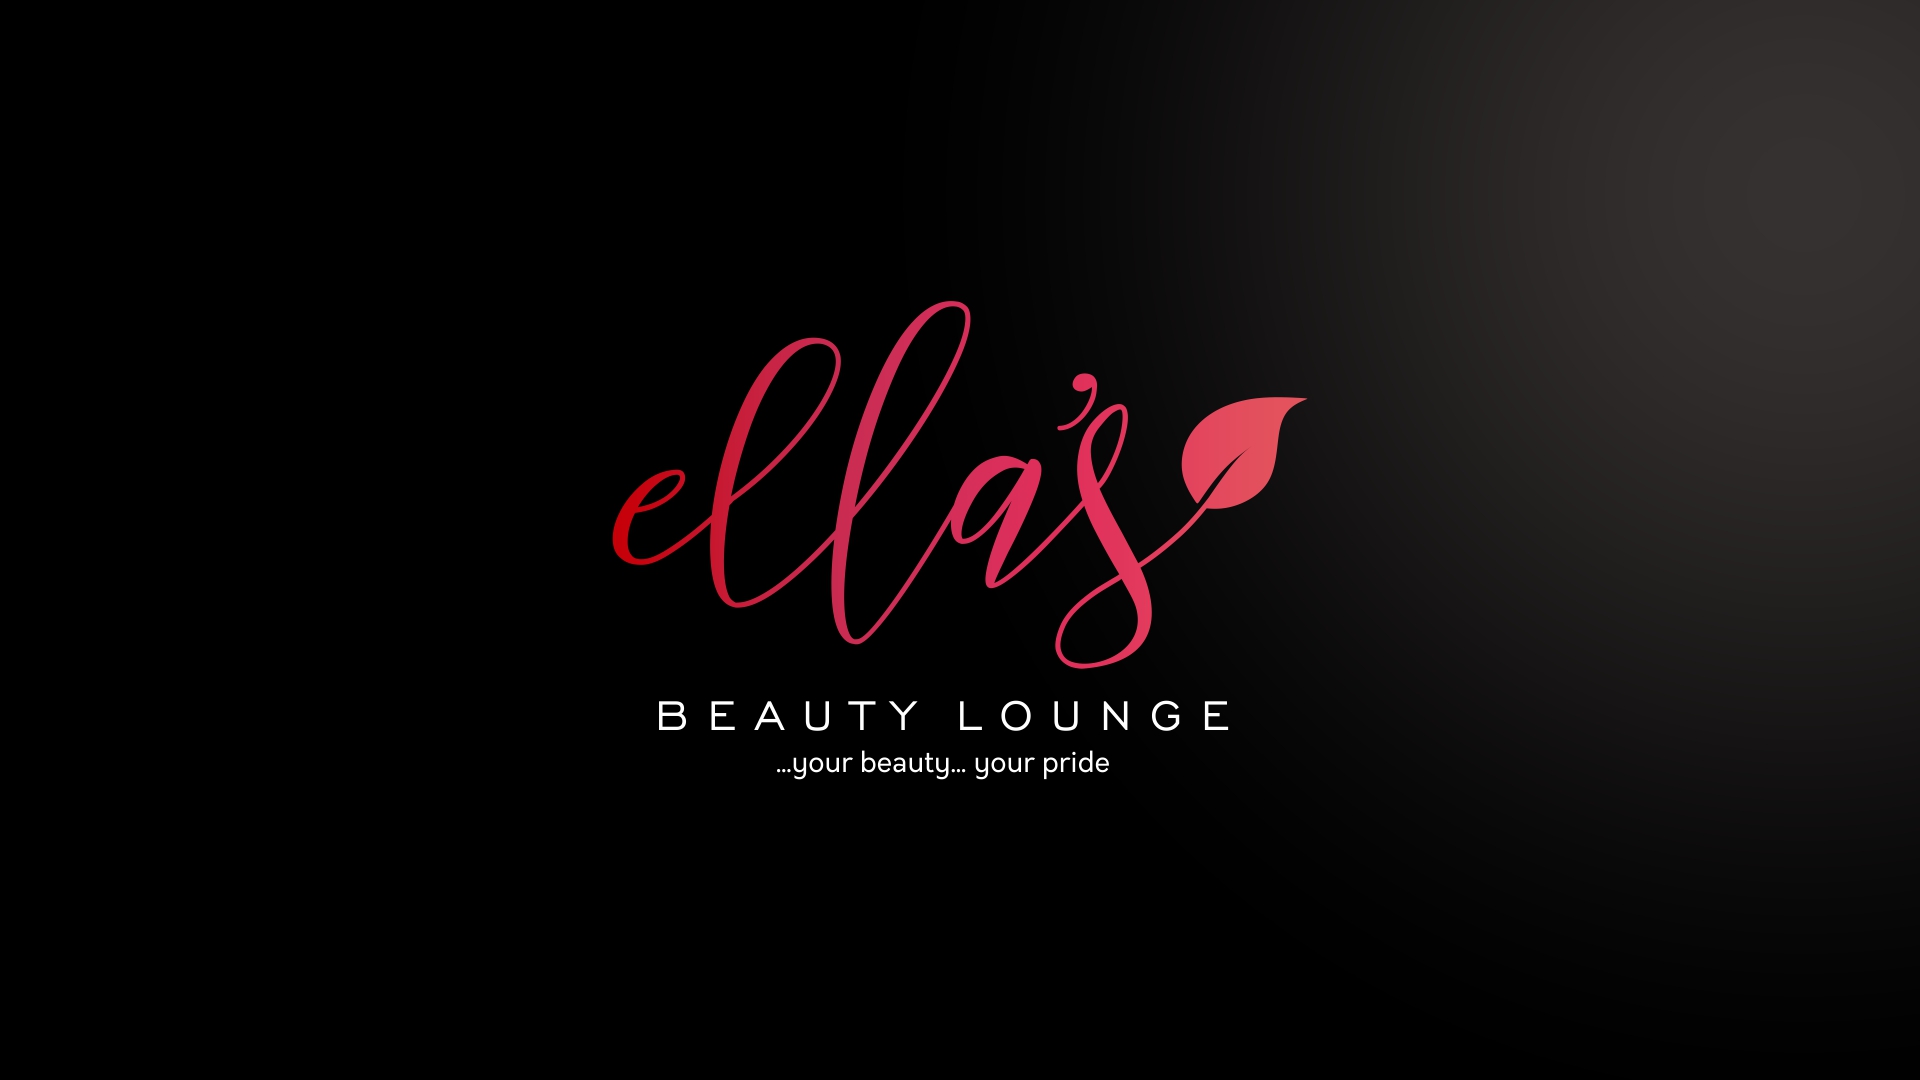 Ella's Beauty Lounge